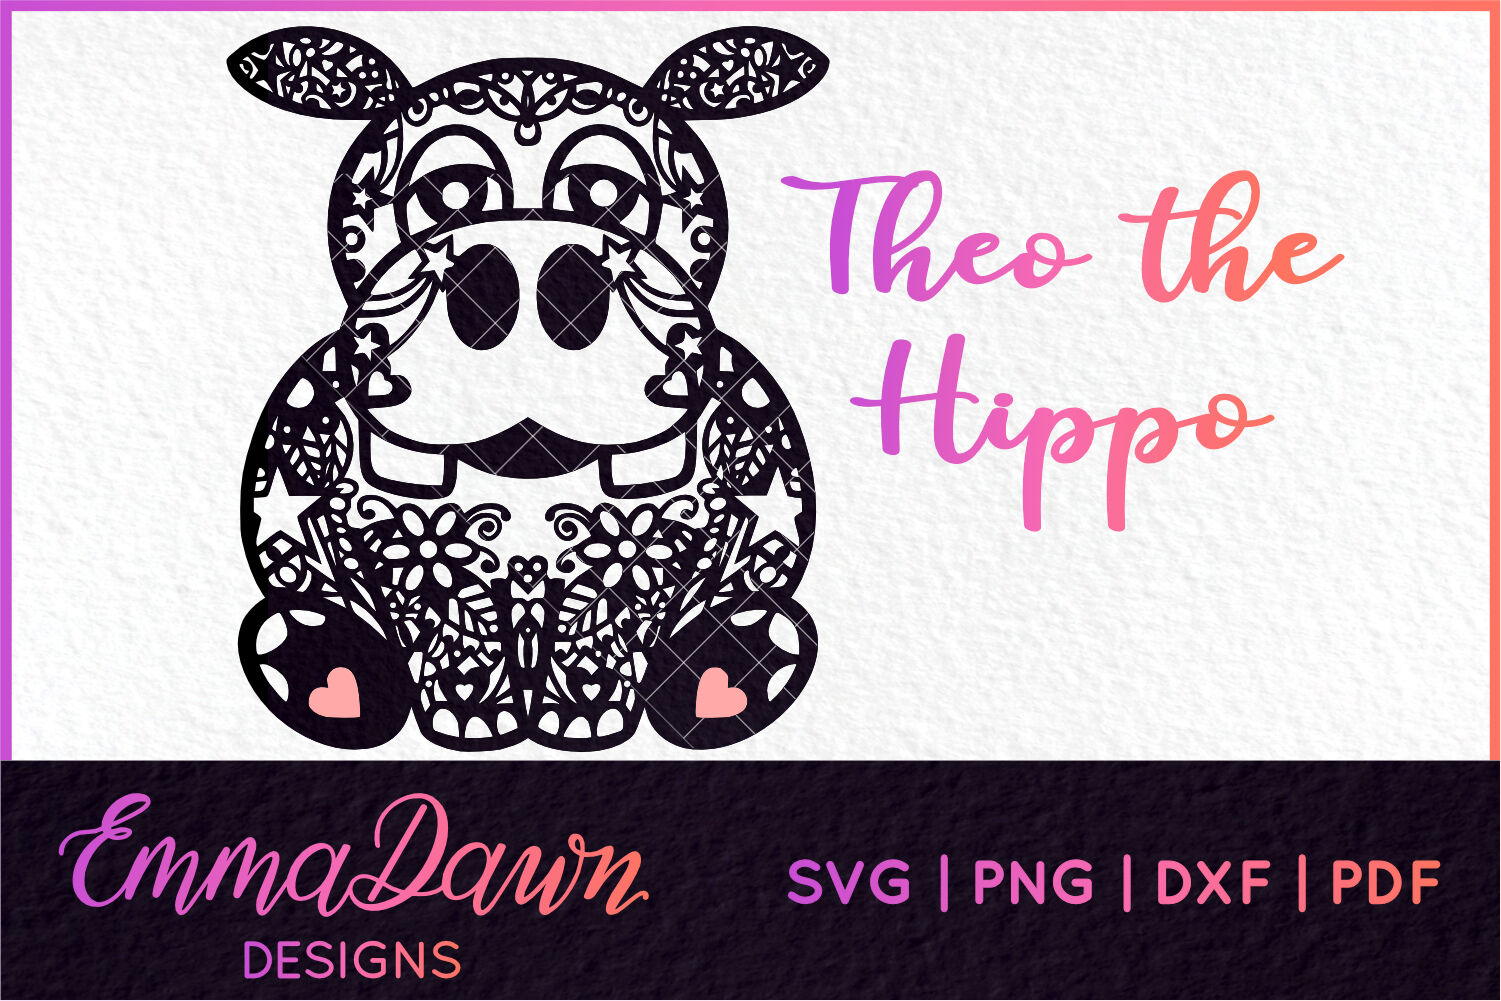 Download Theo The Hippo Mandala Zentangle Design Svg By Emma Dawn Designs Thehungryjpeg Com